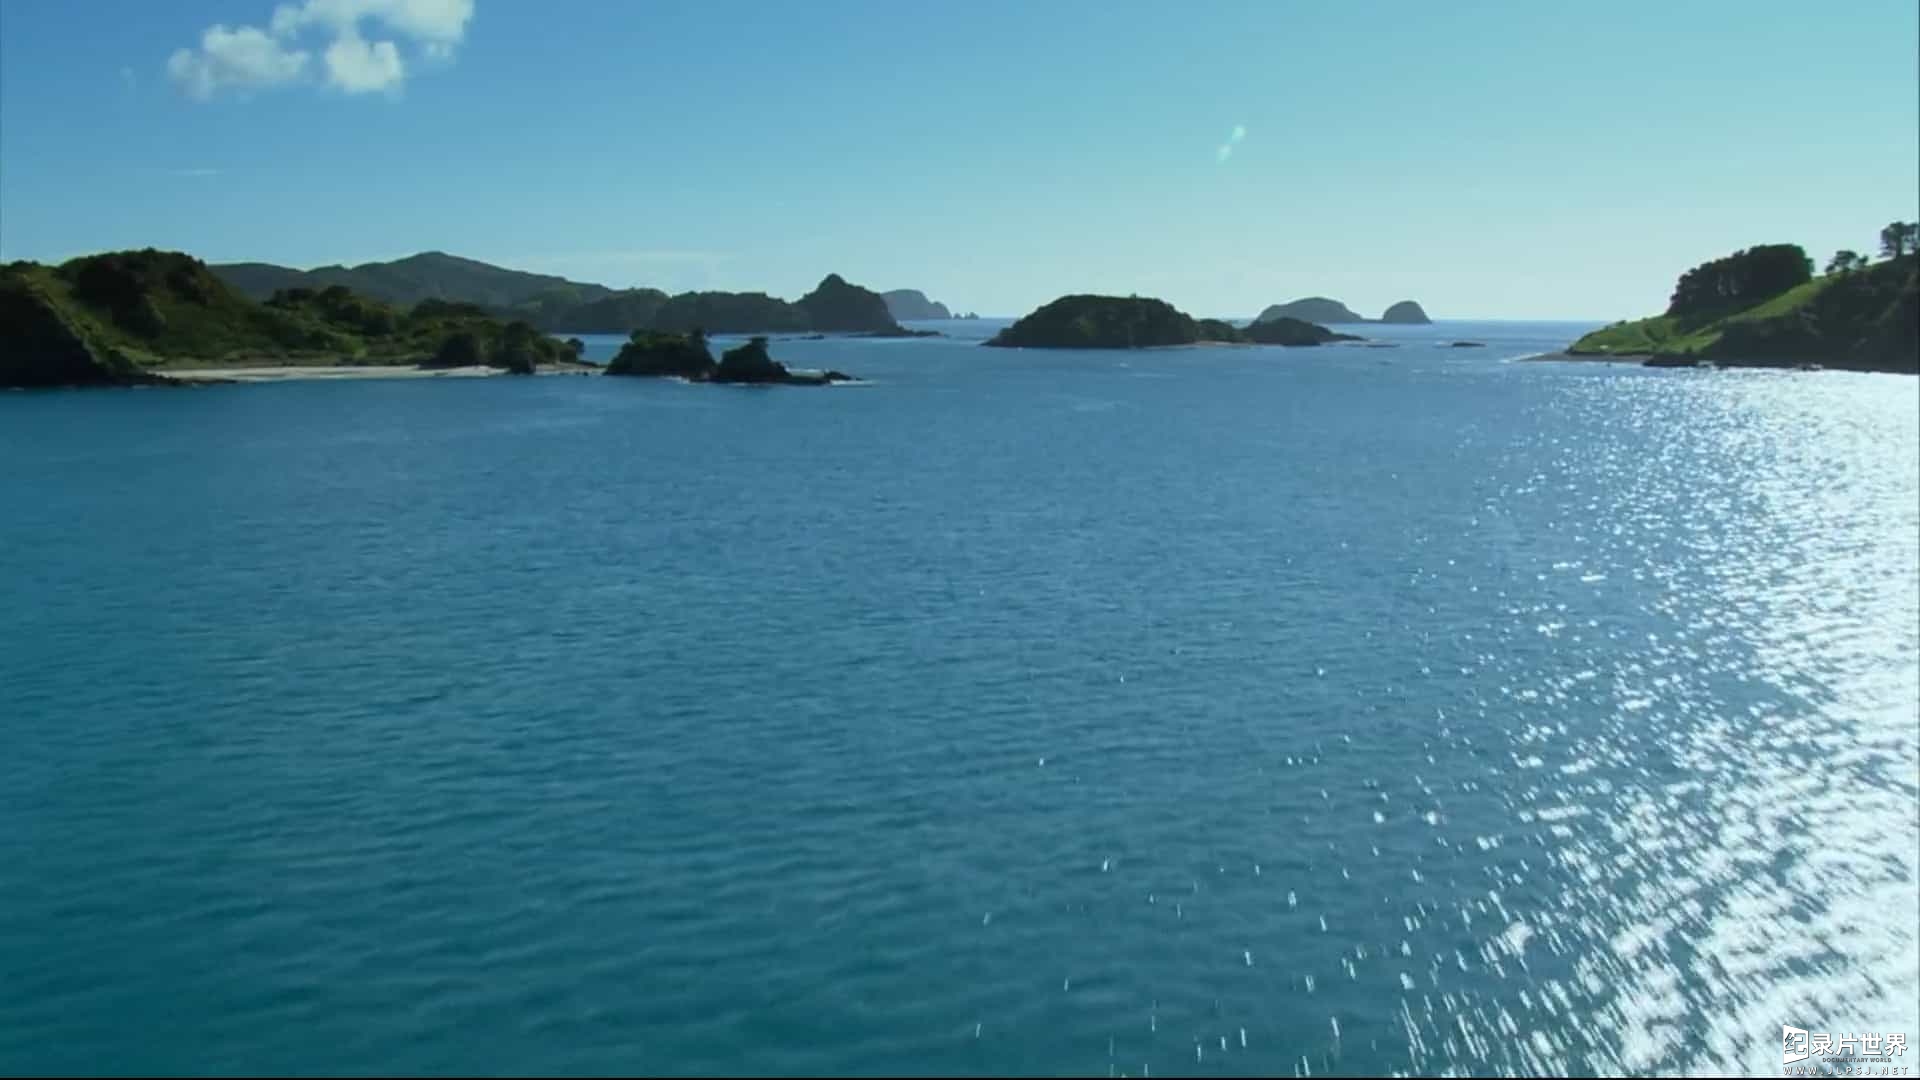 BBC纪录片《新西兰：神话之岛/野性新西兰(台) / Wild New Zealand New Zealand: Earth’s Mythical Islands》全3集